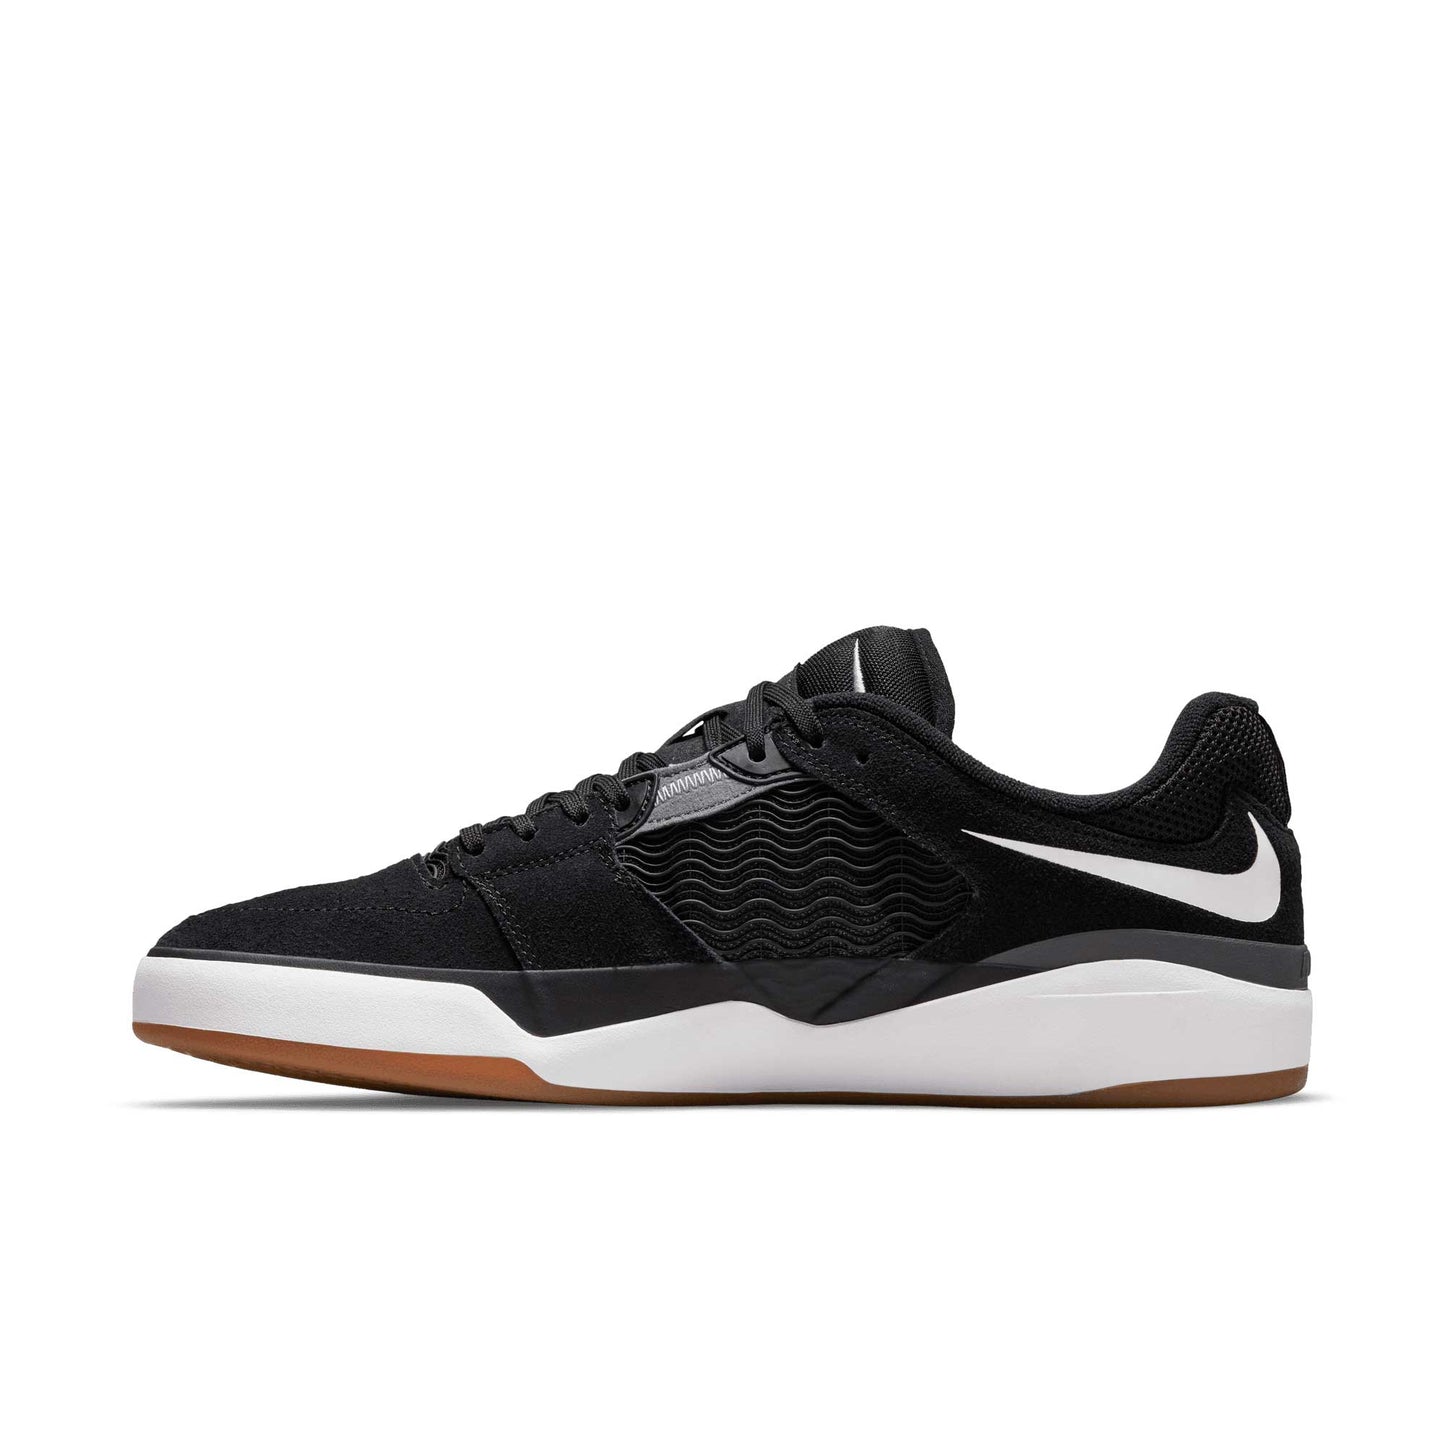 Nike SB Ishod Wair, black/white-dark grey-black - Tiki Room Skateboards - 9